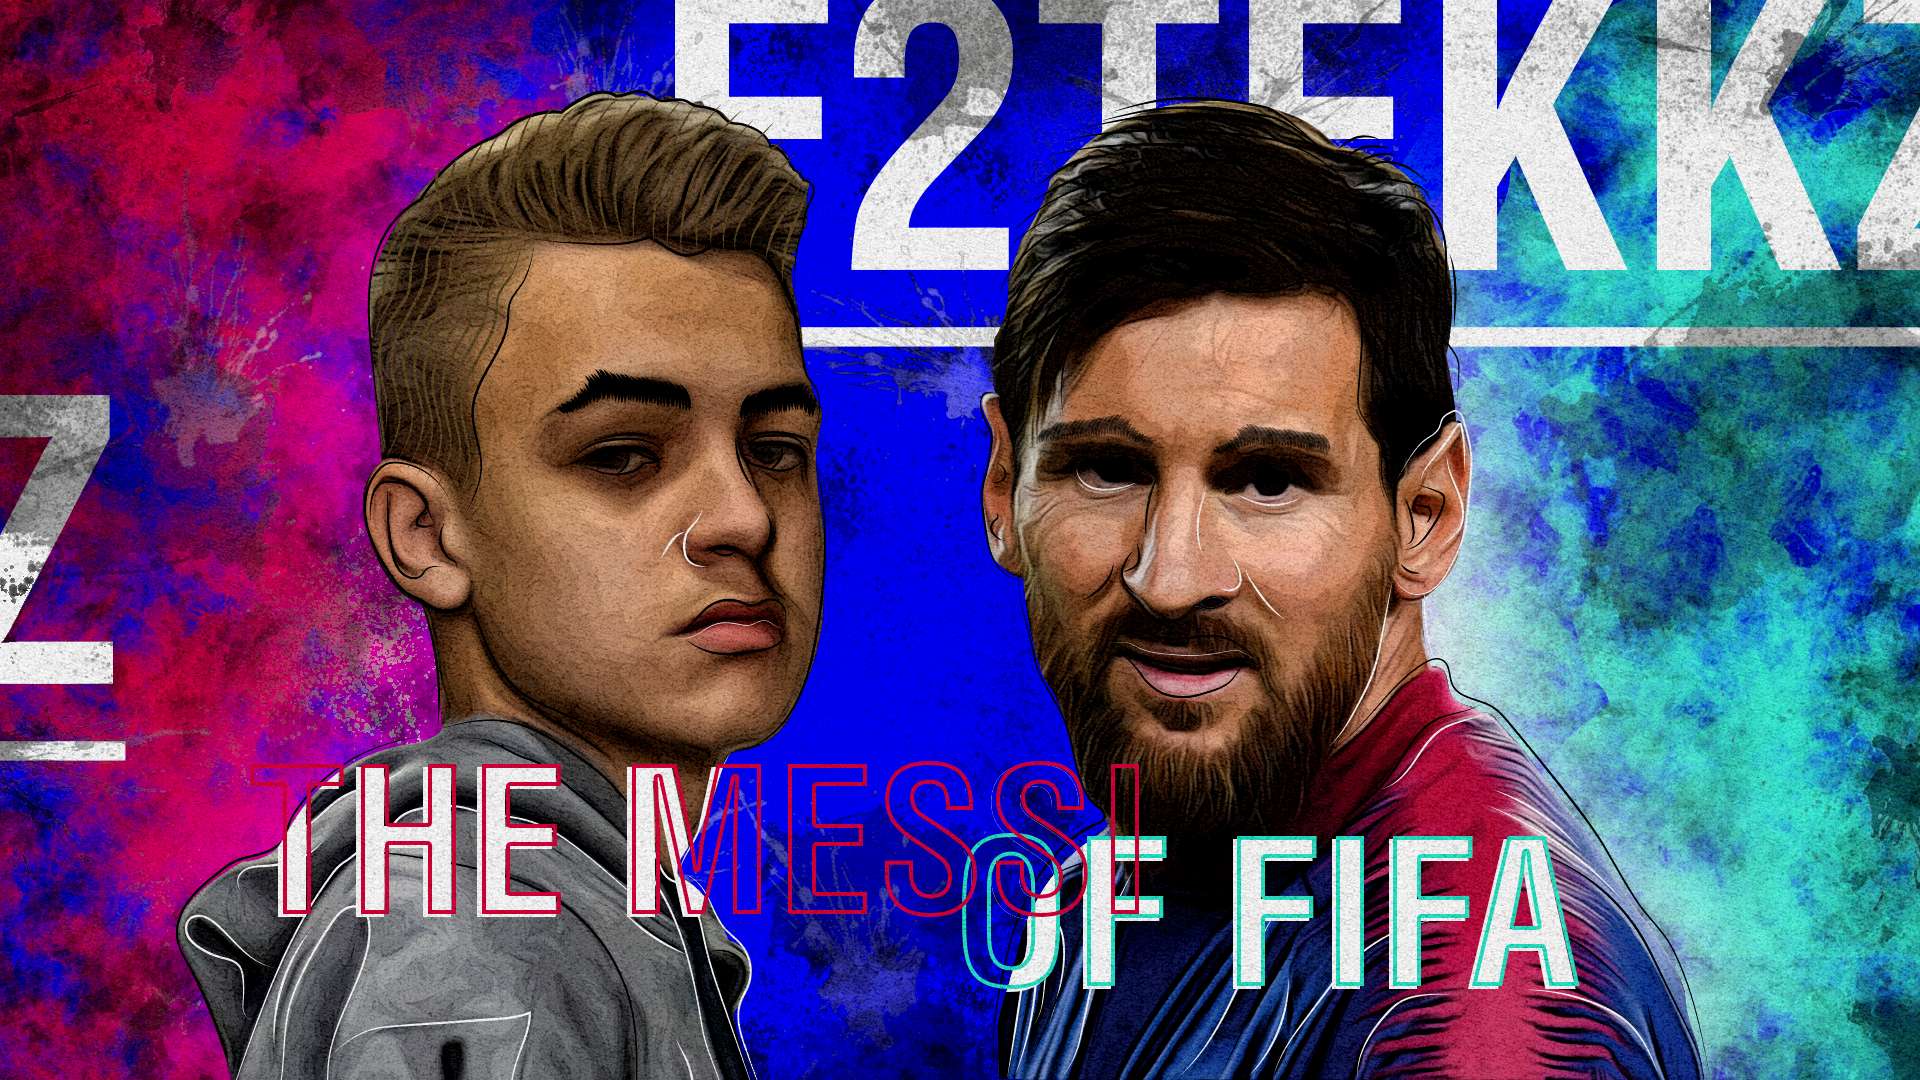 F2Tekkz Messi GFX